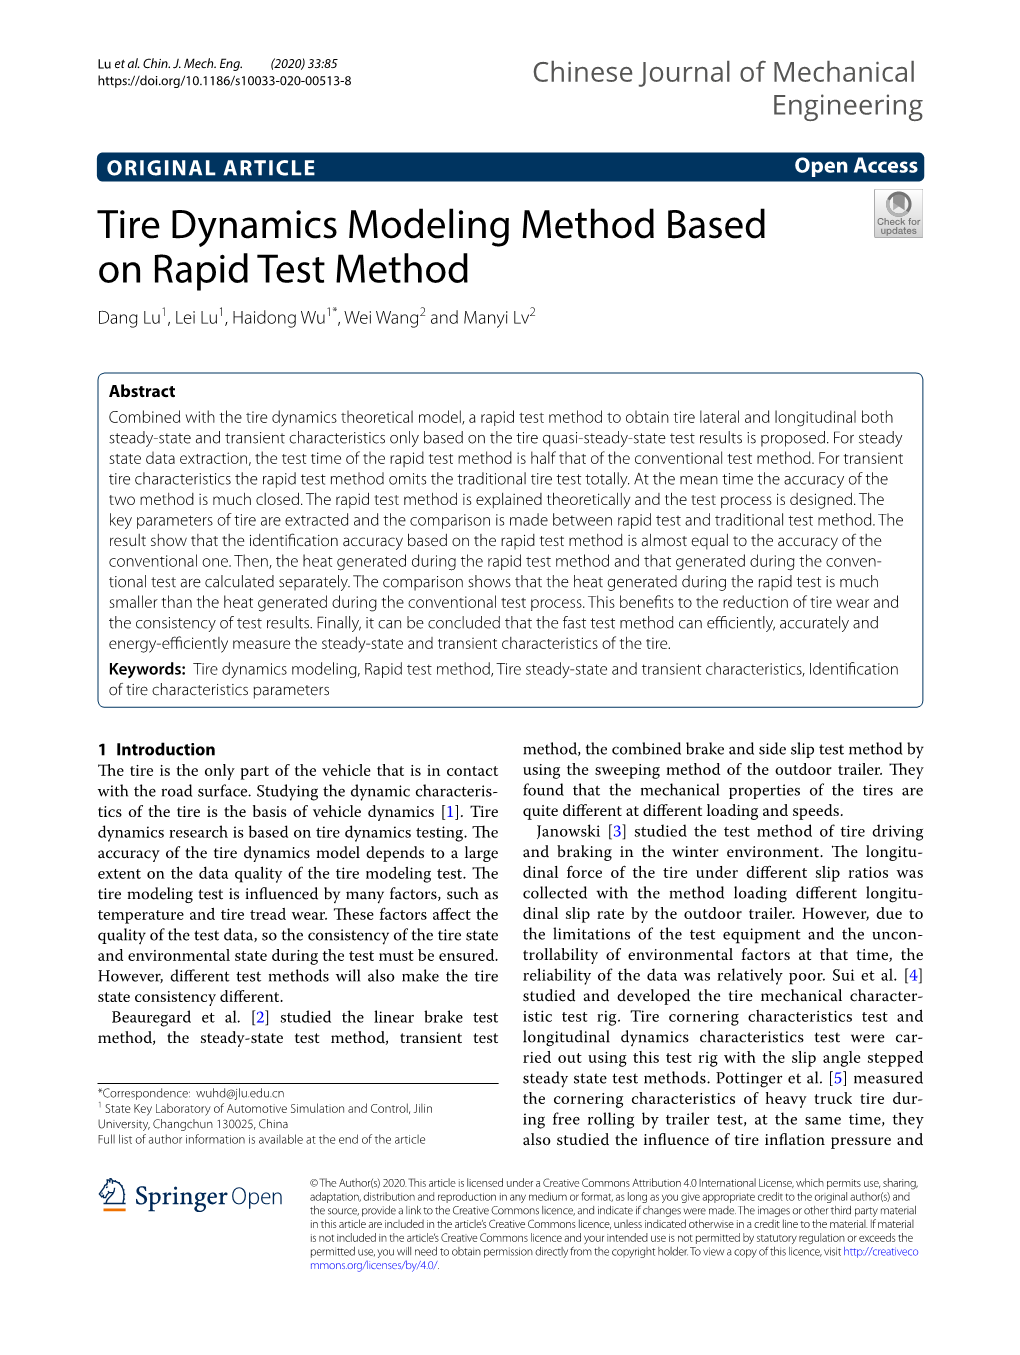 Tire Dynamics Modeling Method Based on Rapid Test Method Dang Lu1, Lei Lu1, Haidong Wu1*, Wei Wang2 and Manyi Lv2